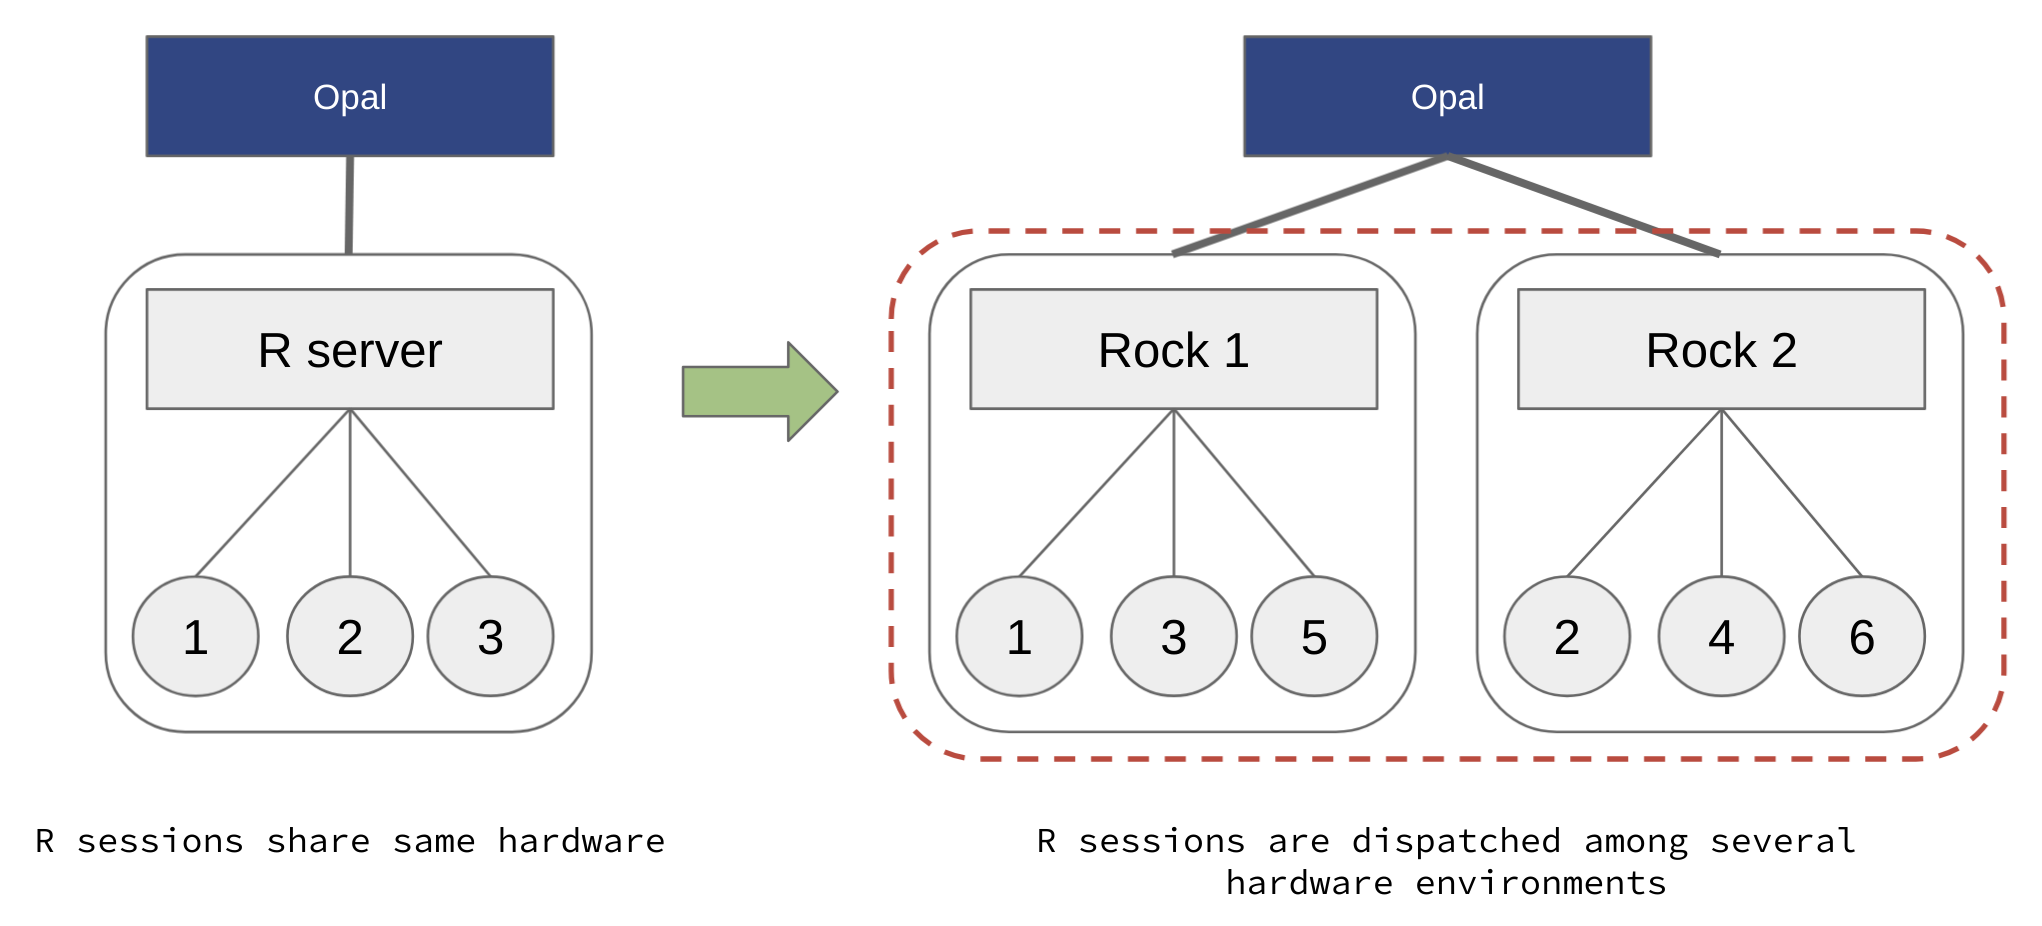 Rock horizontal scalability